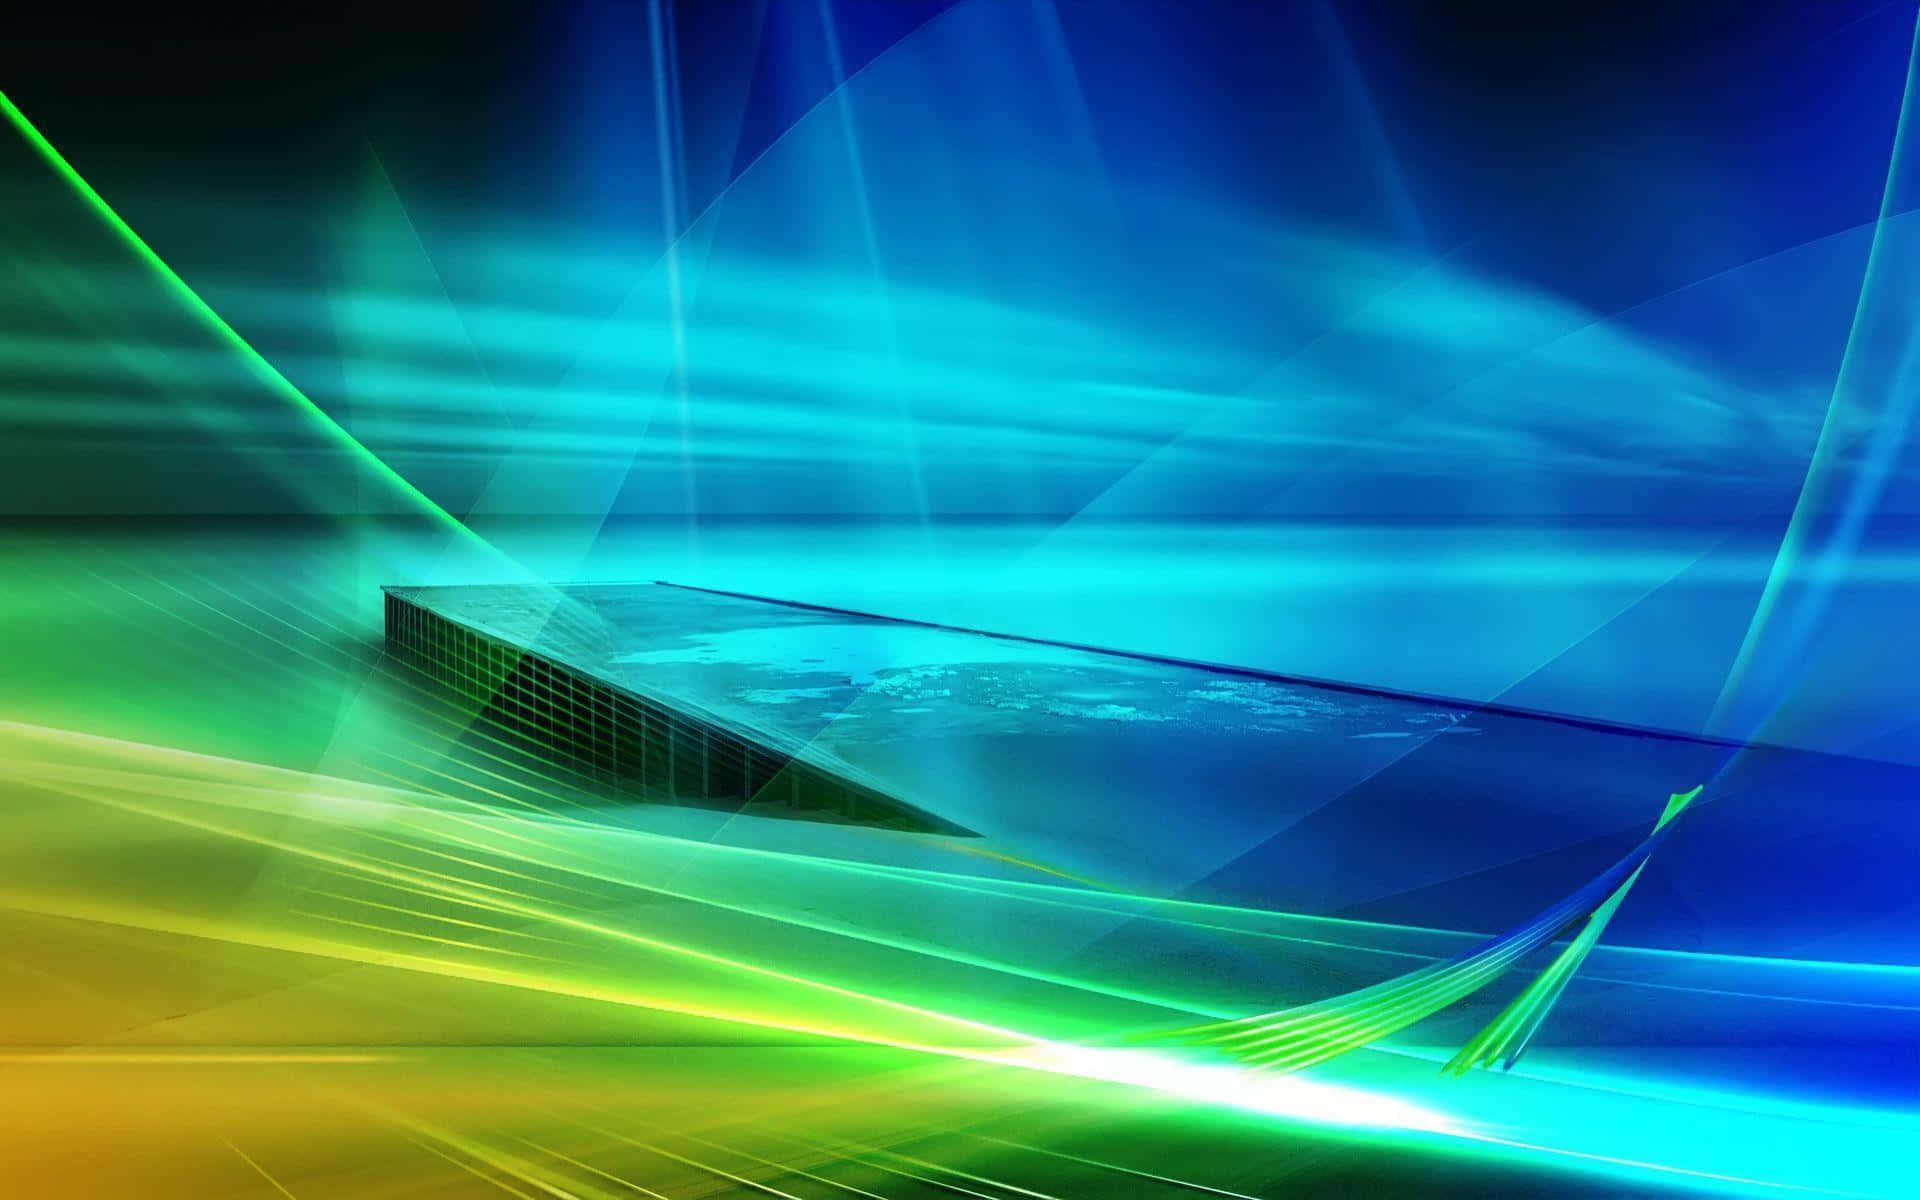 Enjoy the stunning visuals of Windows Vista